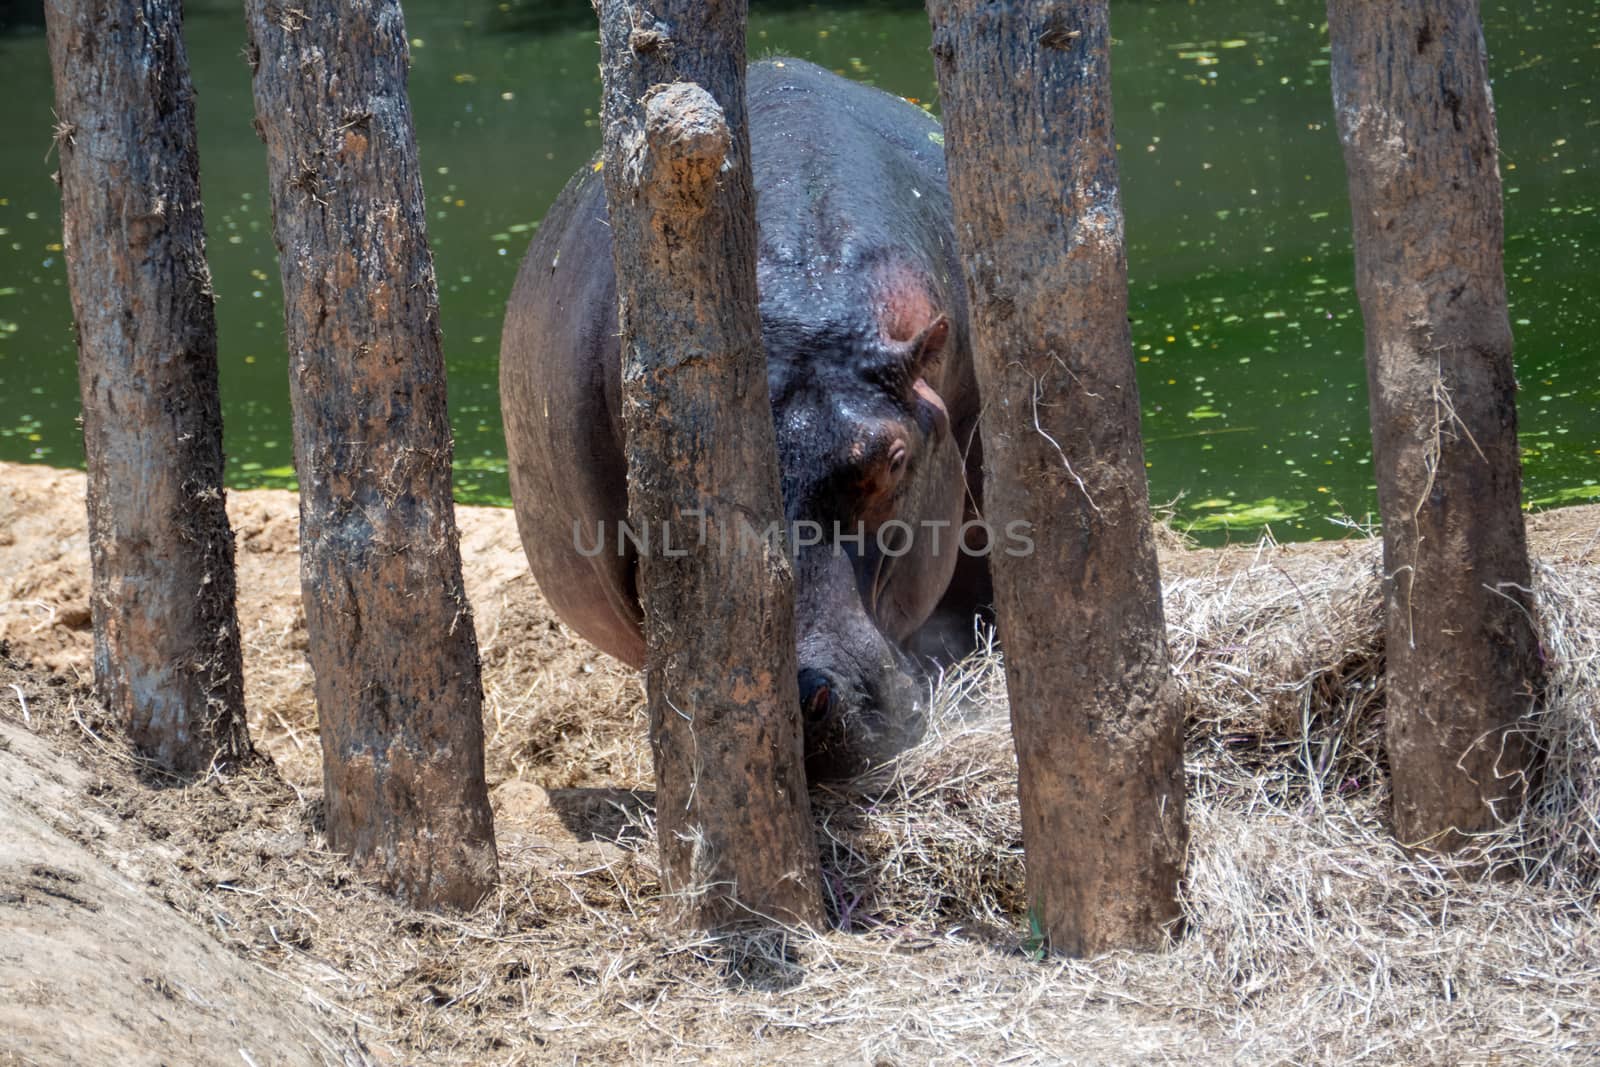 Rhino in enlosed area by lake by imagesbykenny